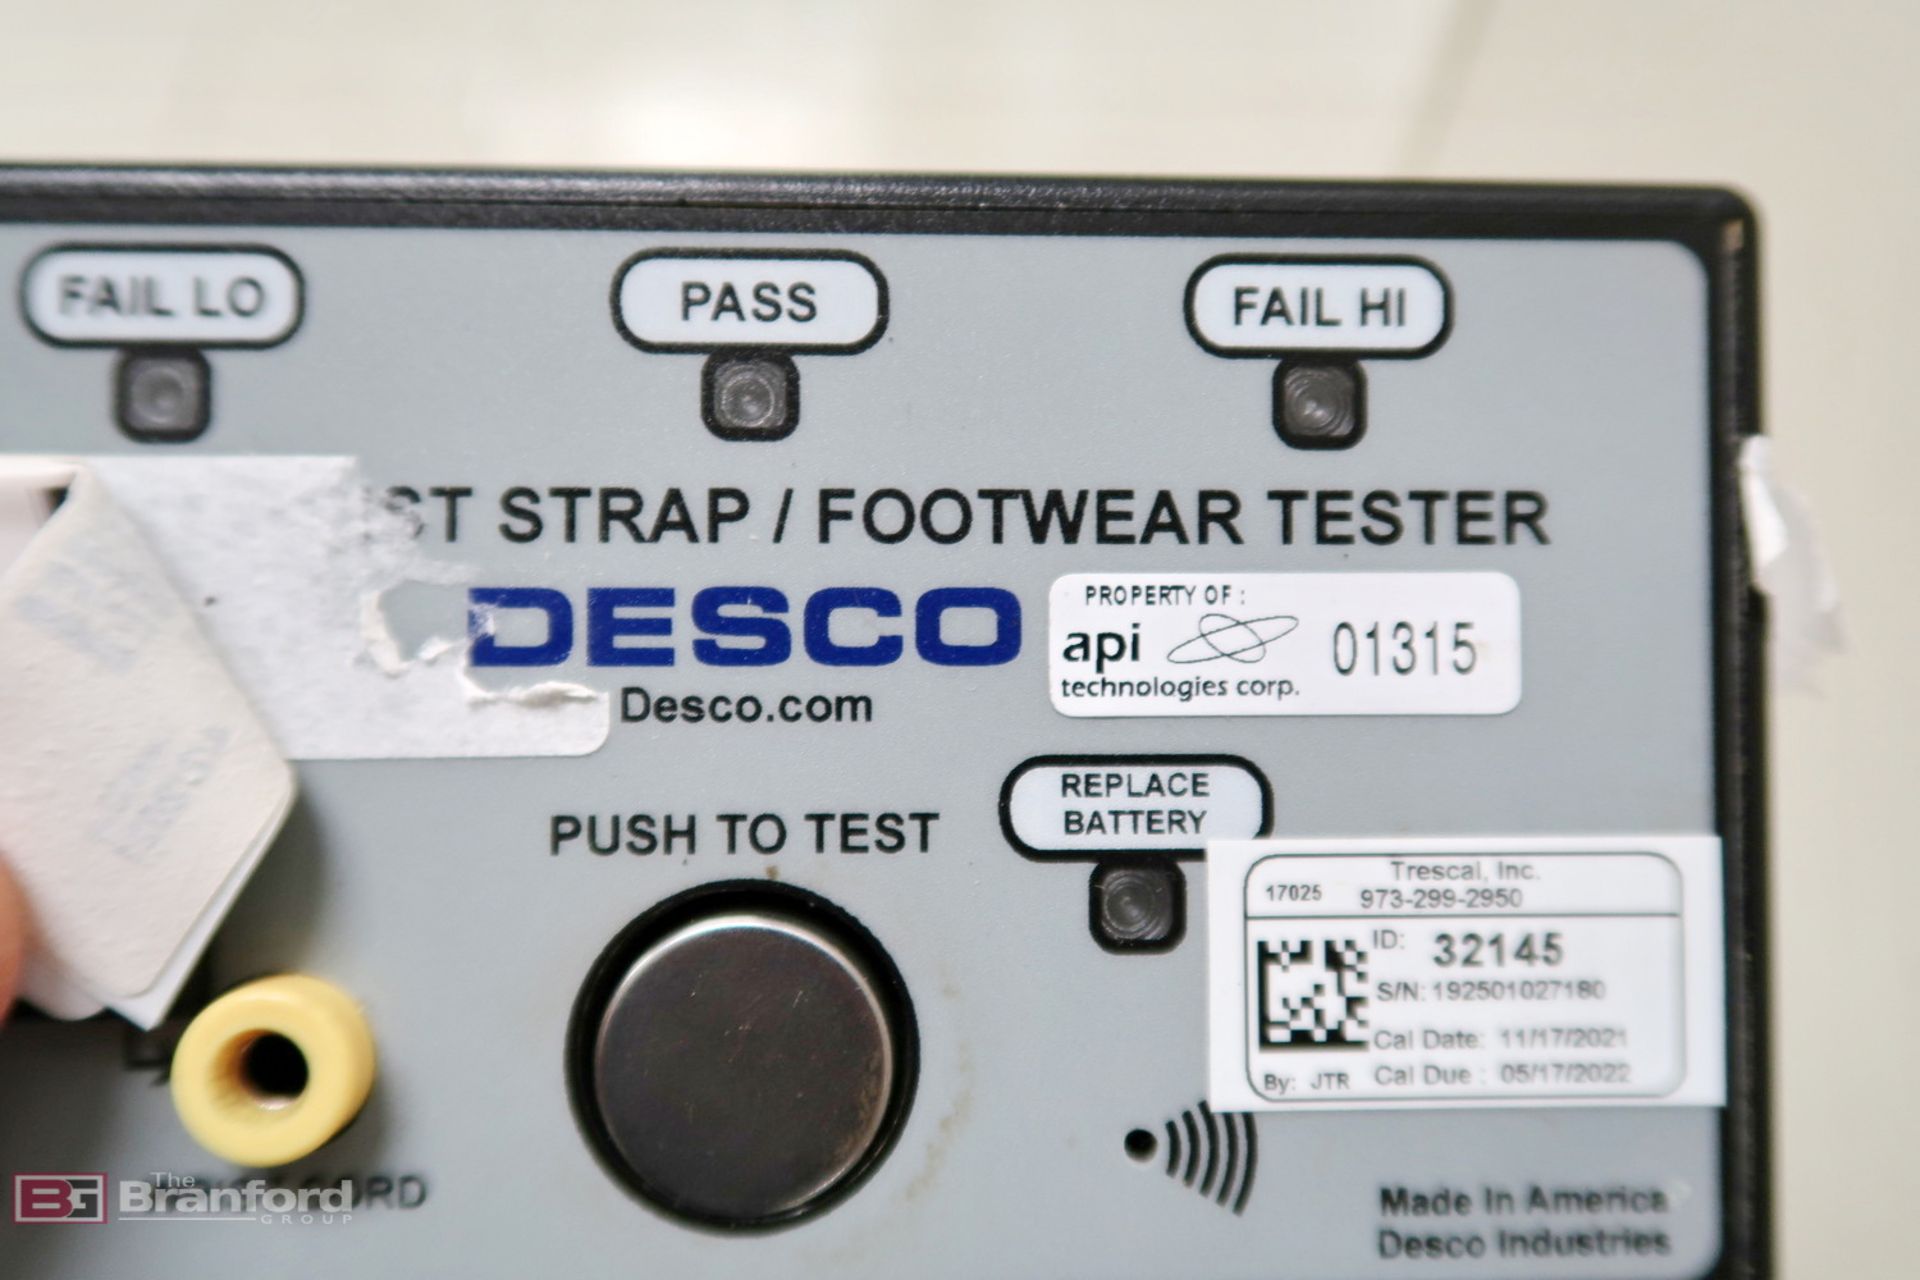 Desco wrist strap / footwear static tester - Image 2 of 2